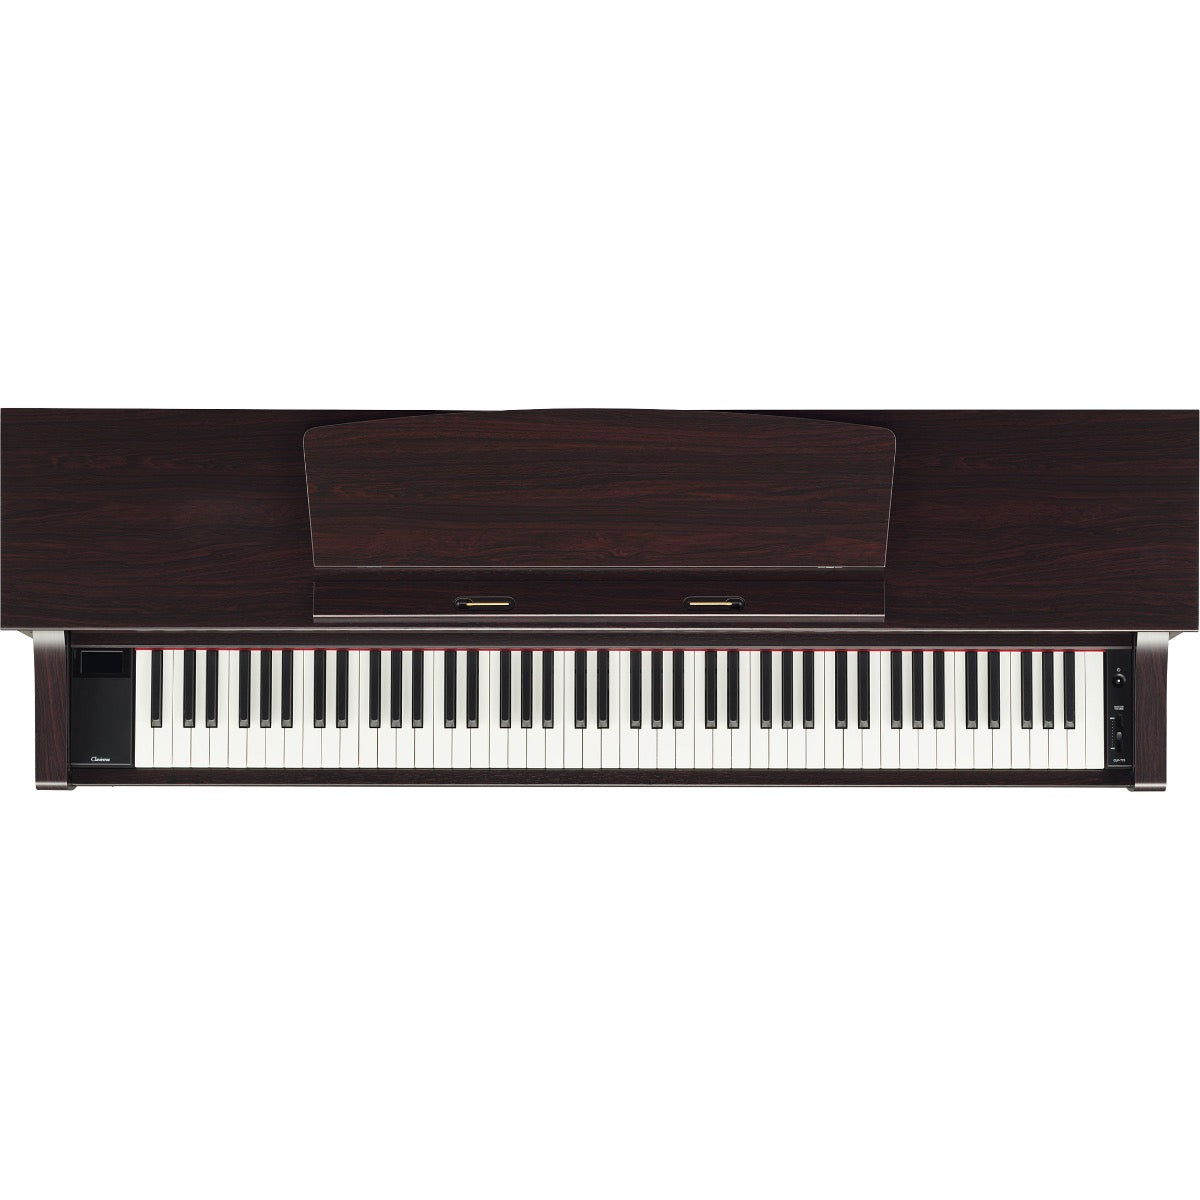 Top view of Yamaha Clavinova CLP-775 Digital Piano - Rosewood